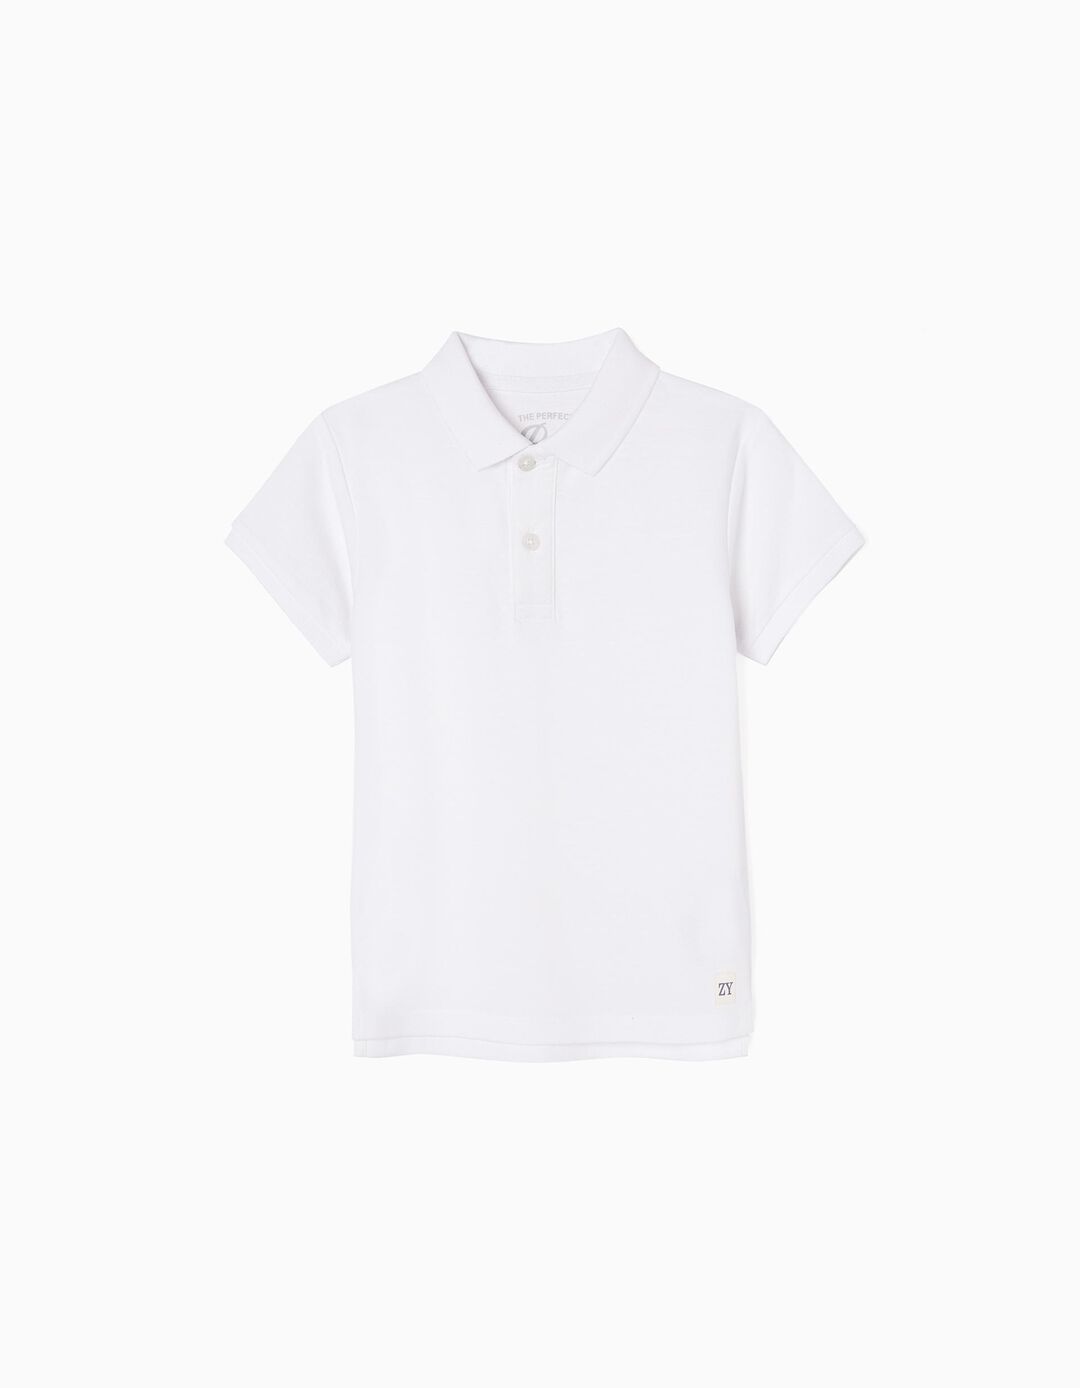 Cotton Polo Shirt for Boys, White